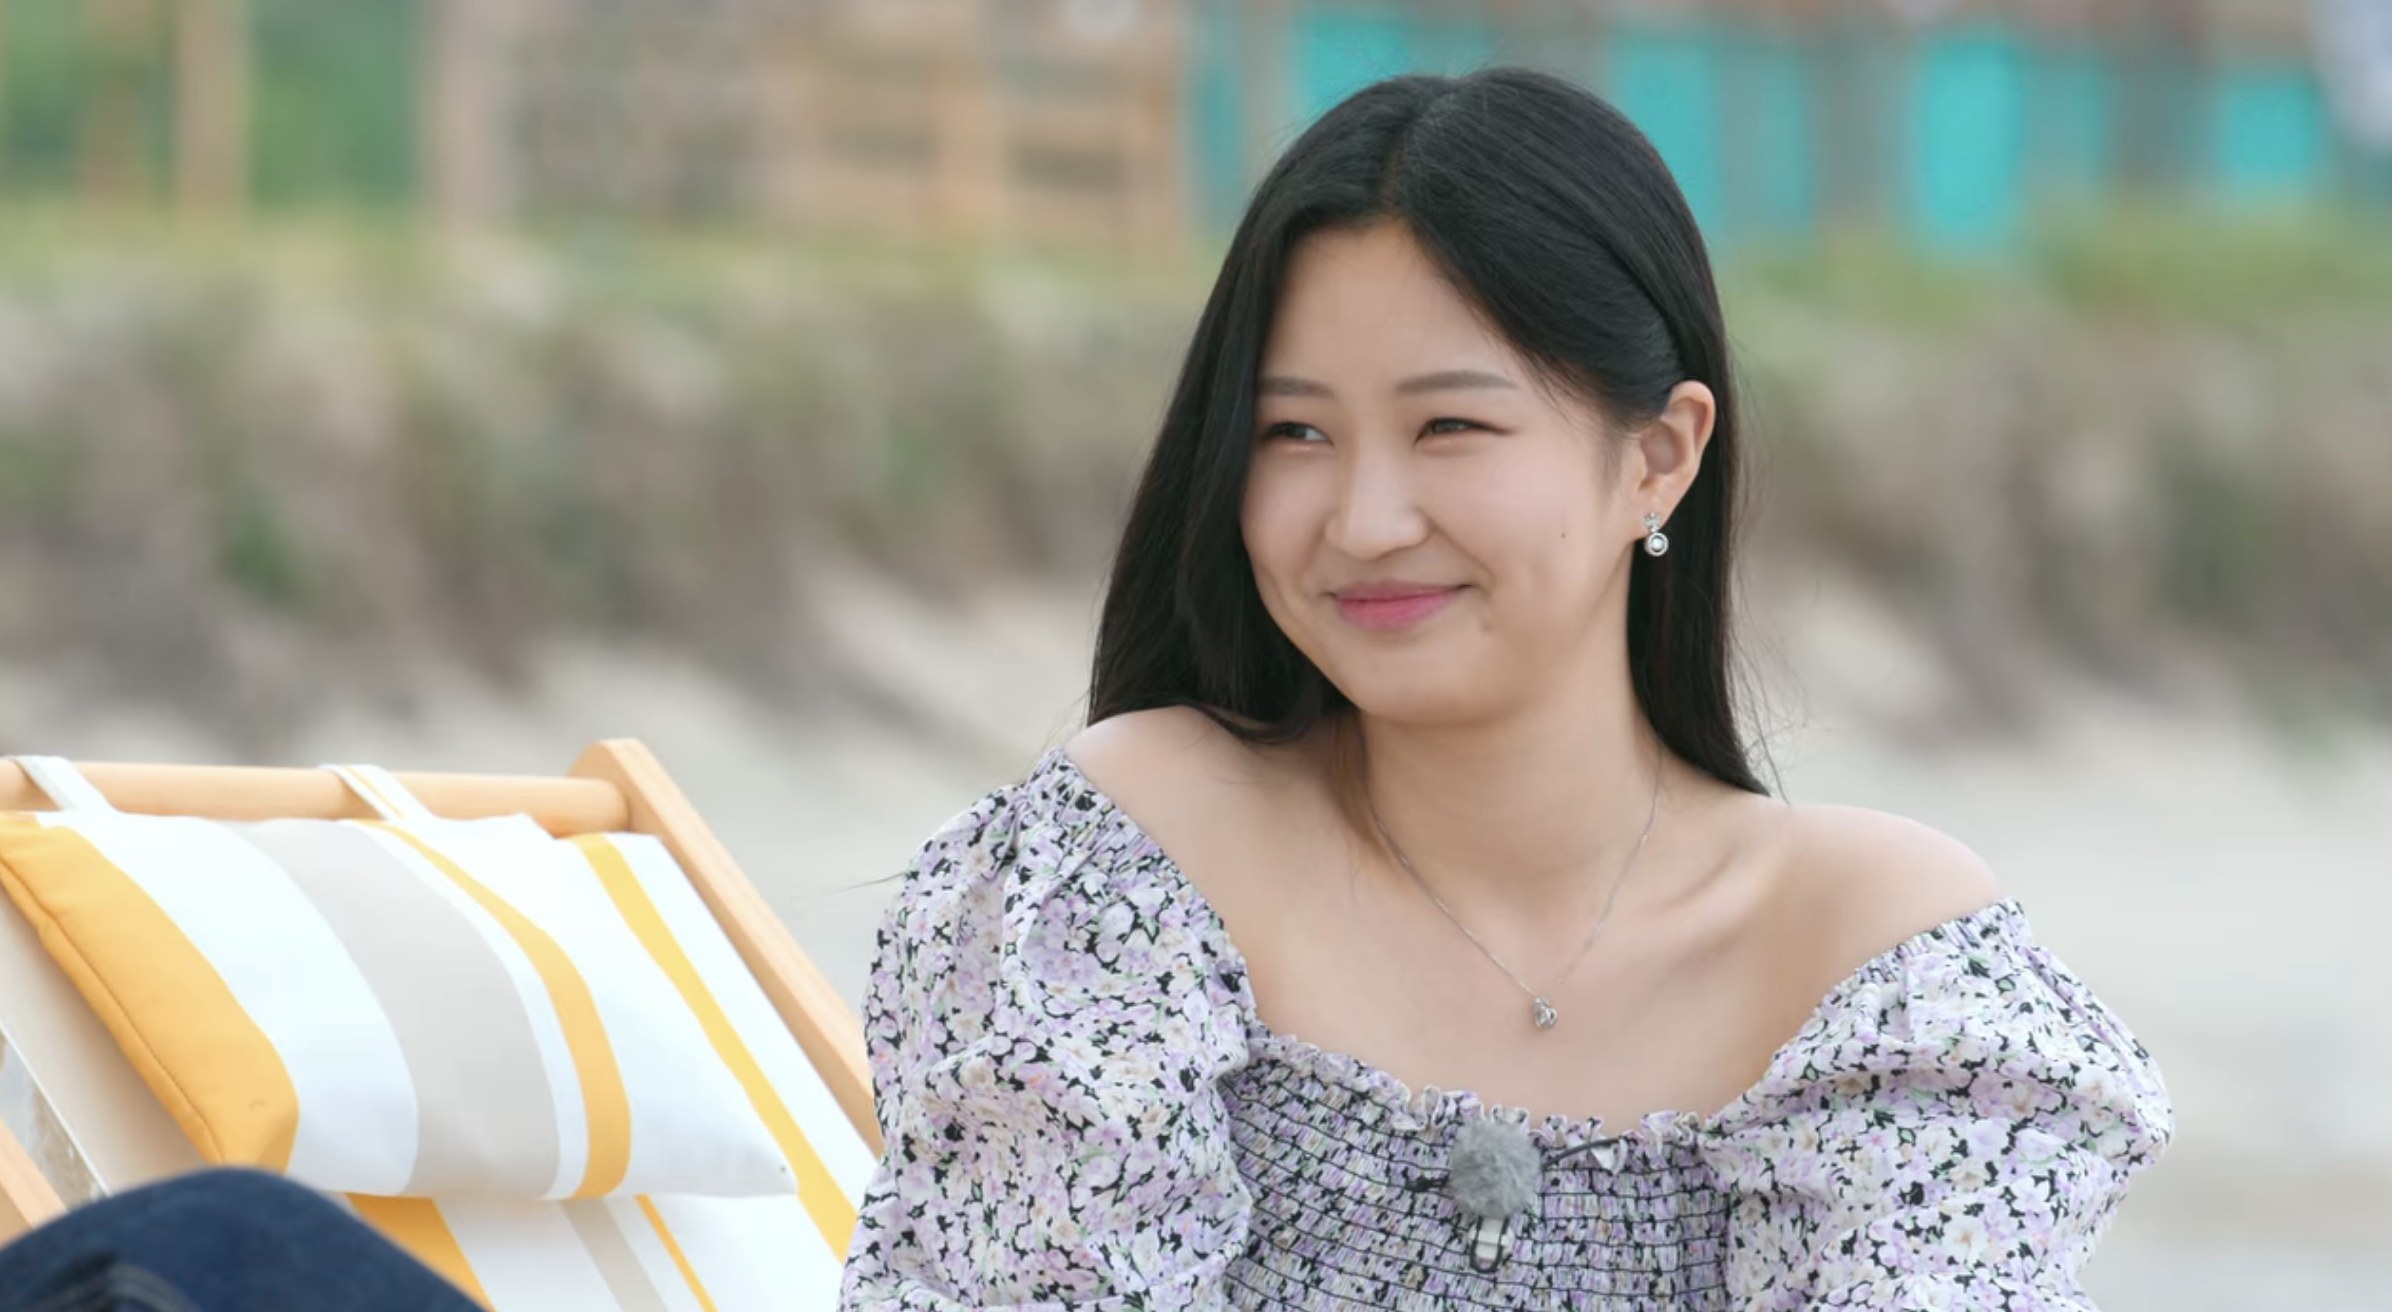 Lim Min-su smiles while sitting on a beach chair